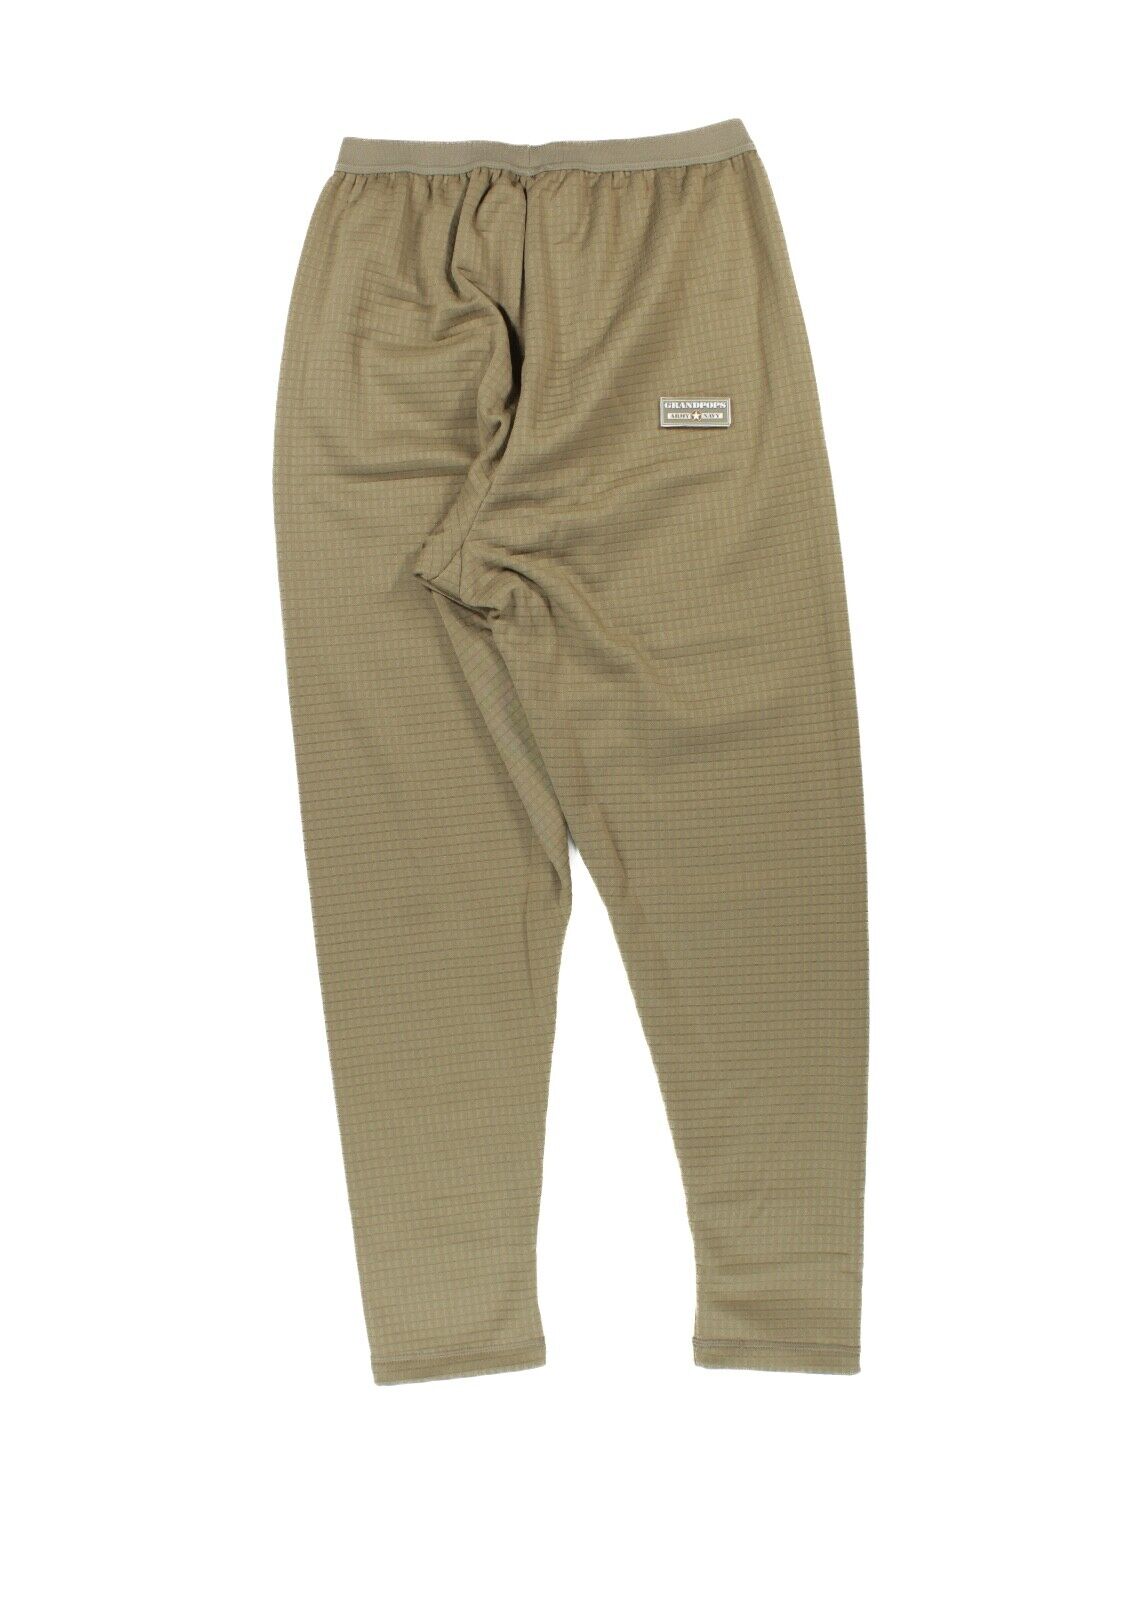 Pants, Nwt Military Gen Iii Level 1 Ecwcs Silk Weight Pants Coyote Brown  Lglong Bi 1